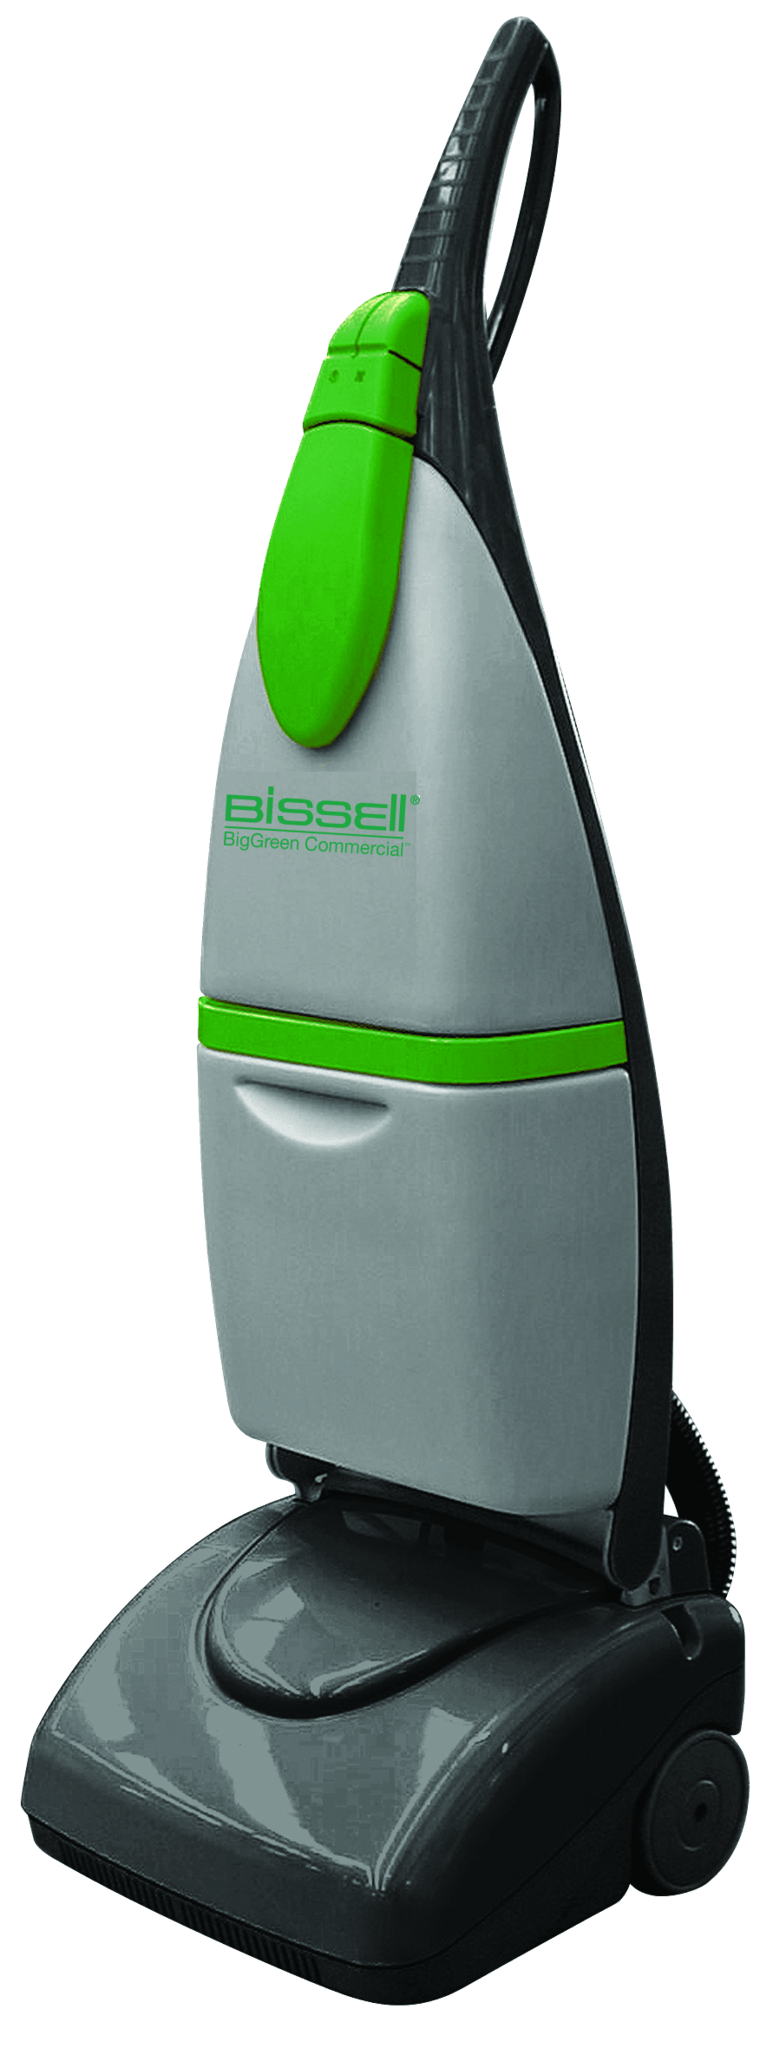 BGUS1500B Battery Floor Scrubber / Dryer - Bissell BigGreen Commercial